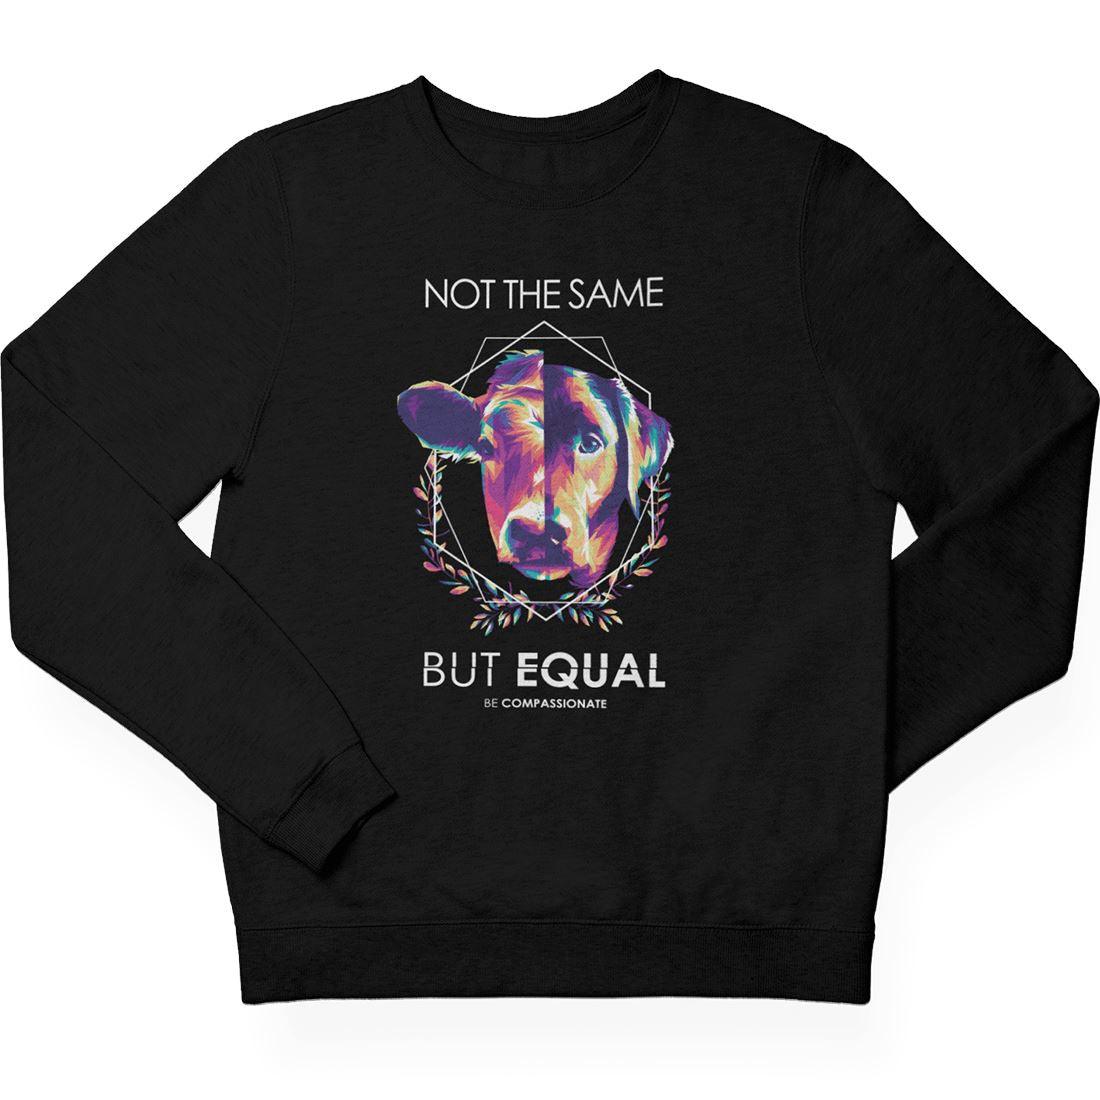 Not the same but equal - Unisex Organic Sweatshirt - Team Vegan © vegan t shirt